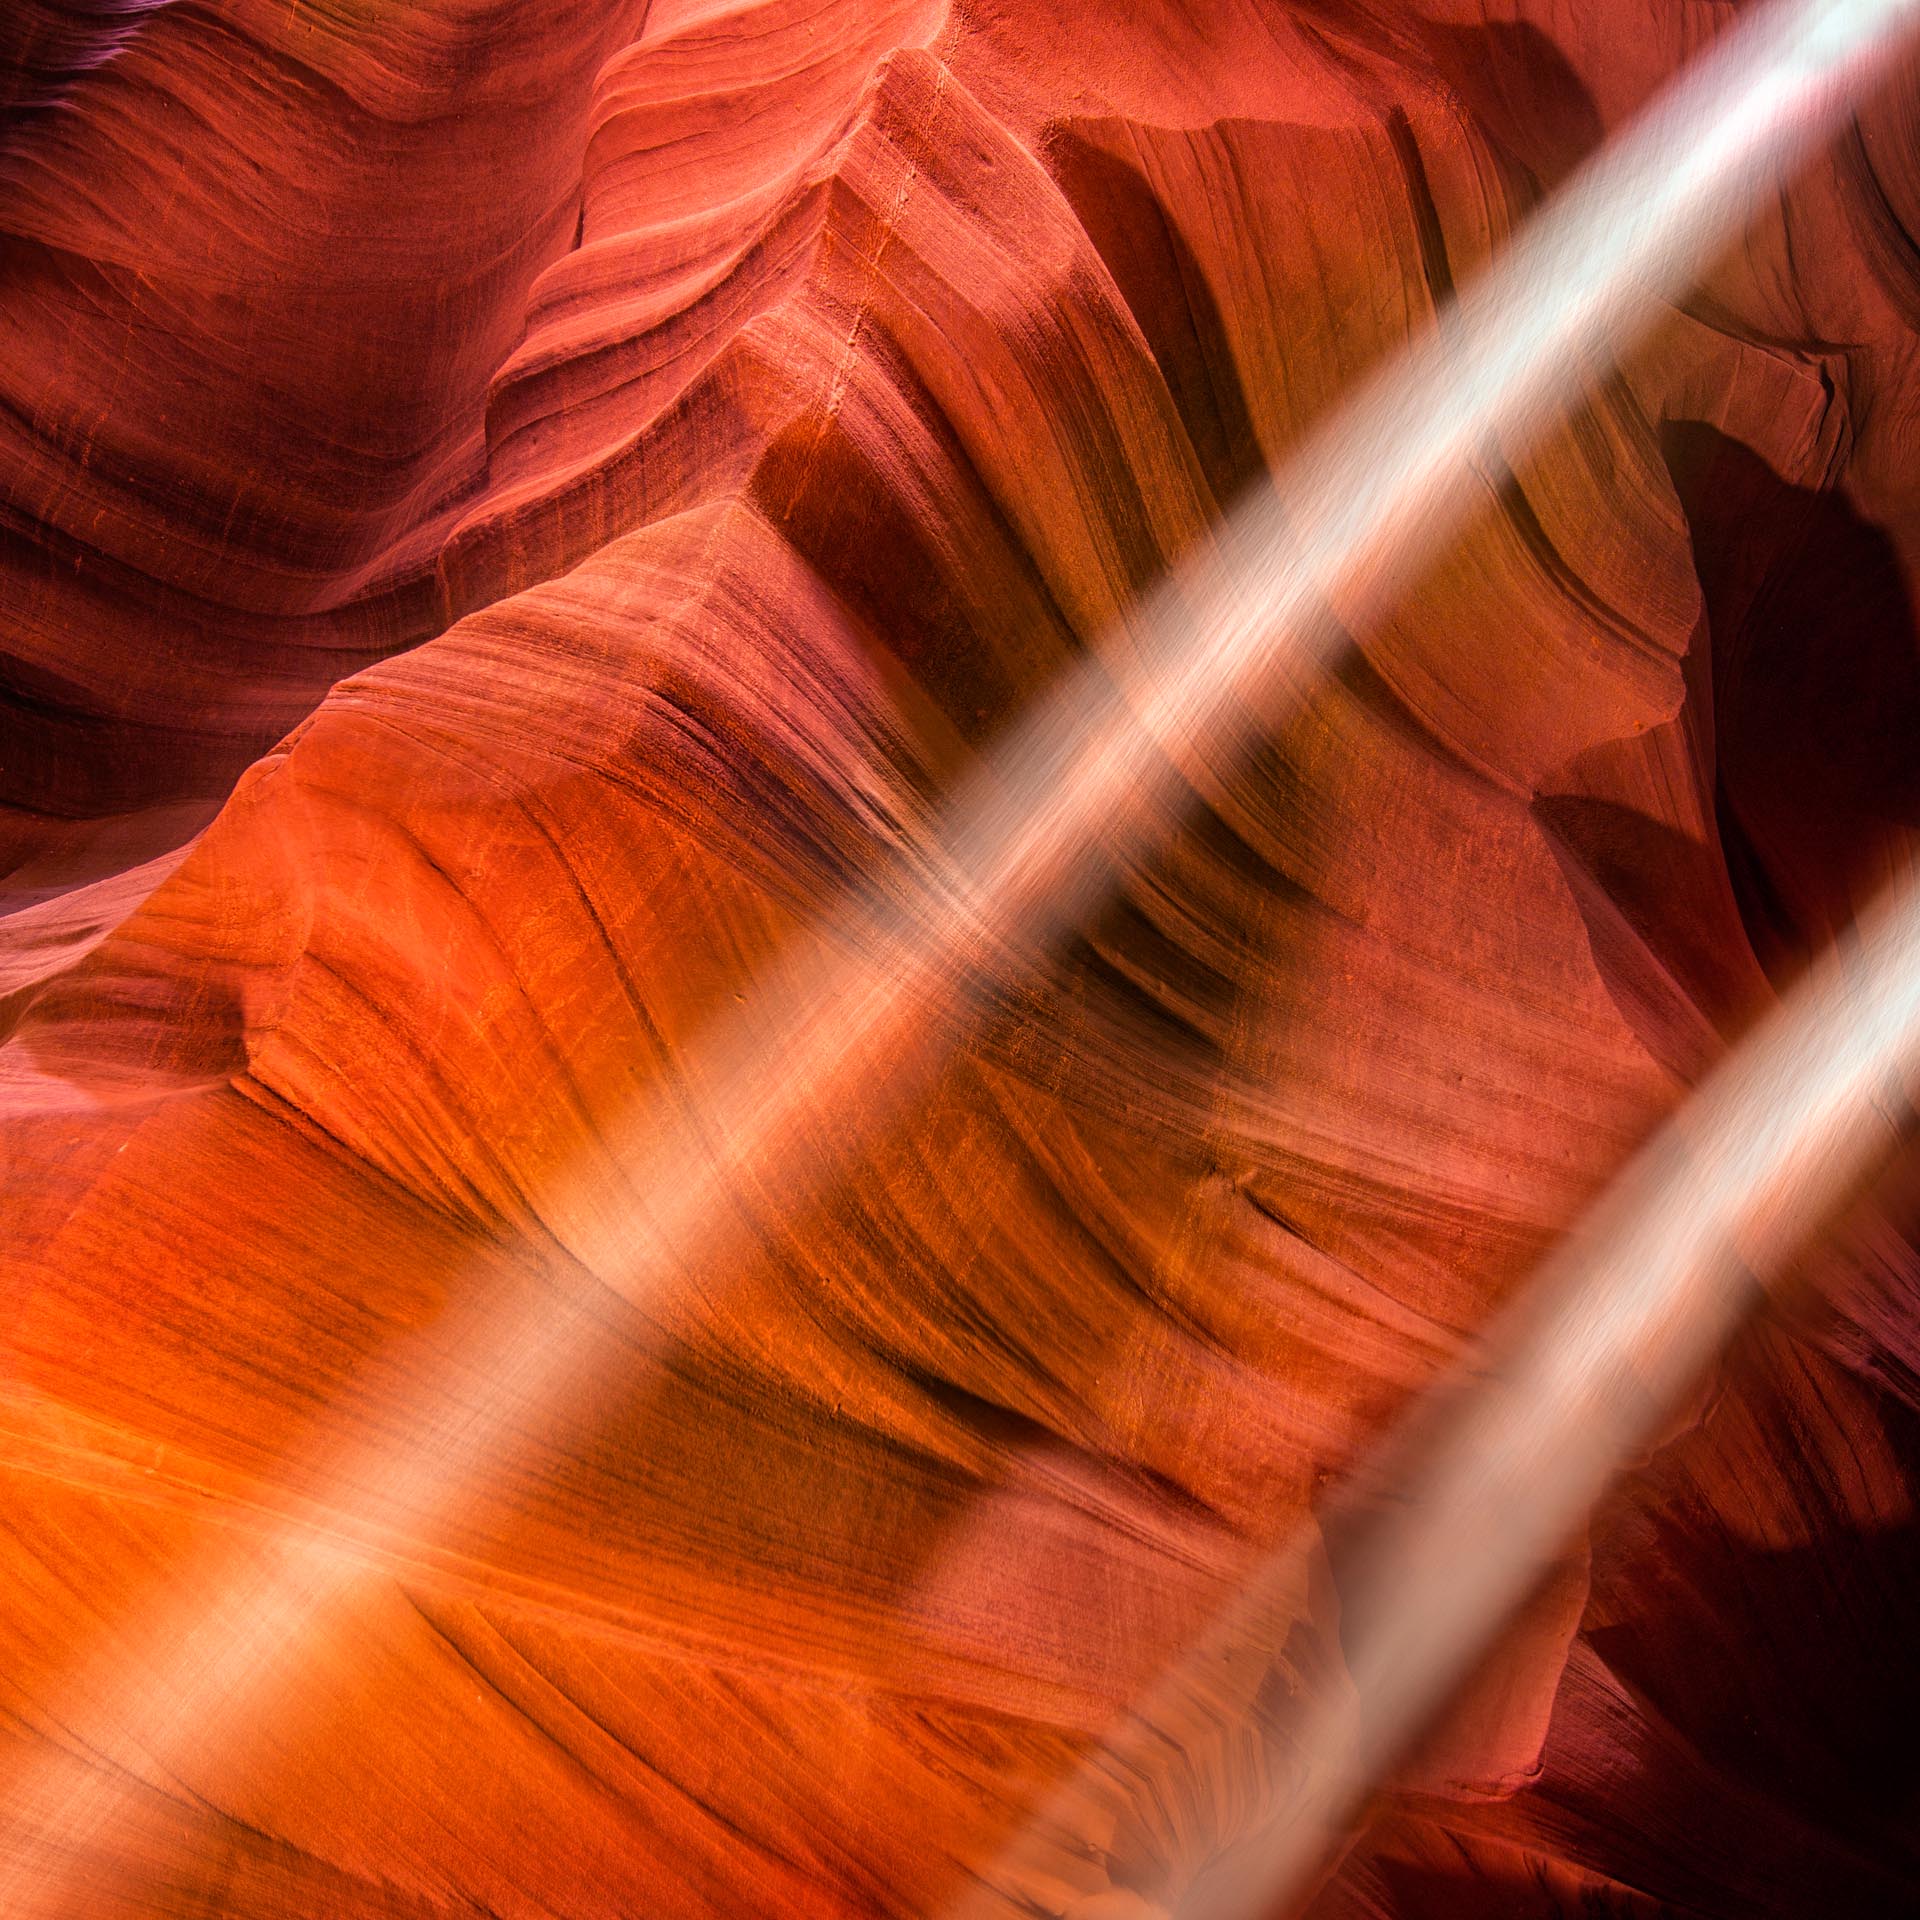 Upper antelope slot canyon light shafts, Arizona